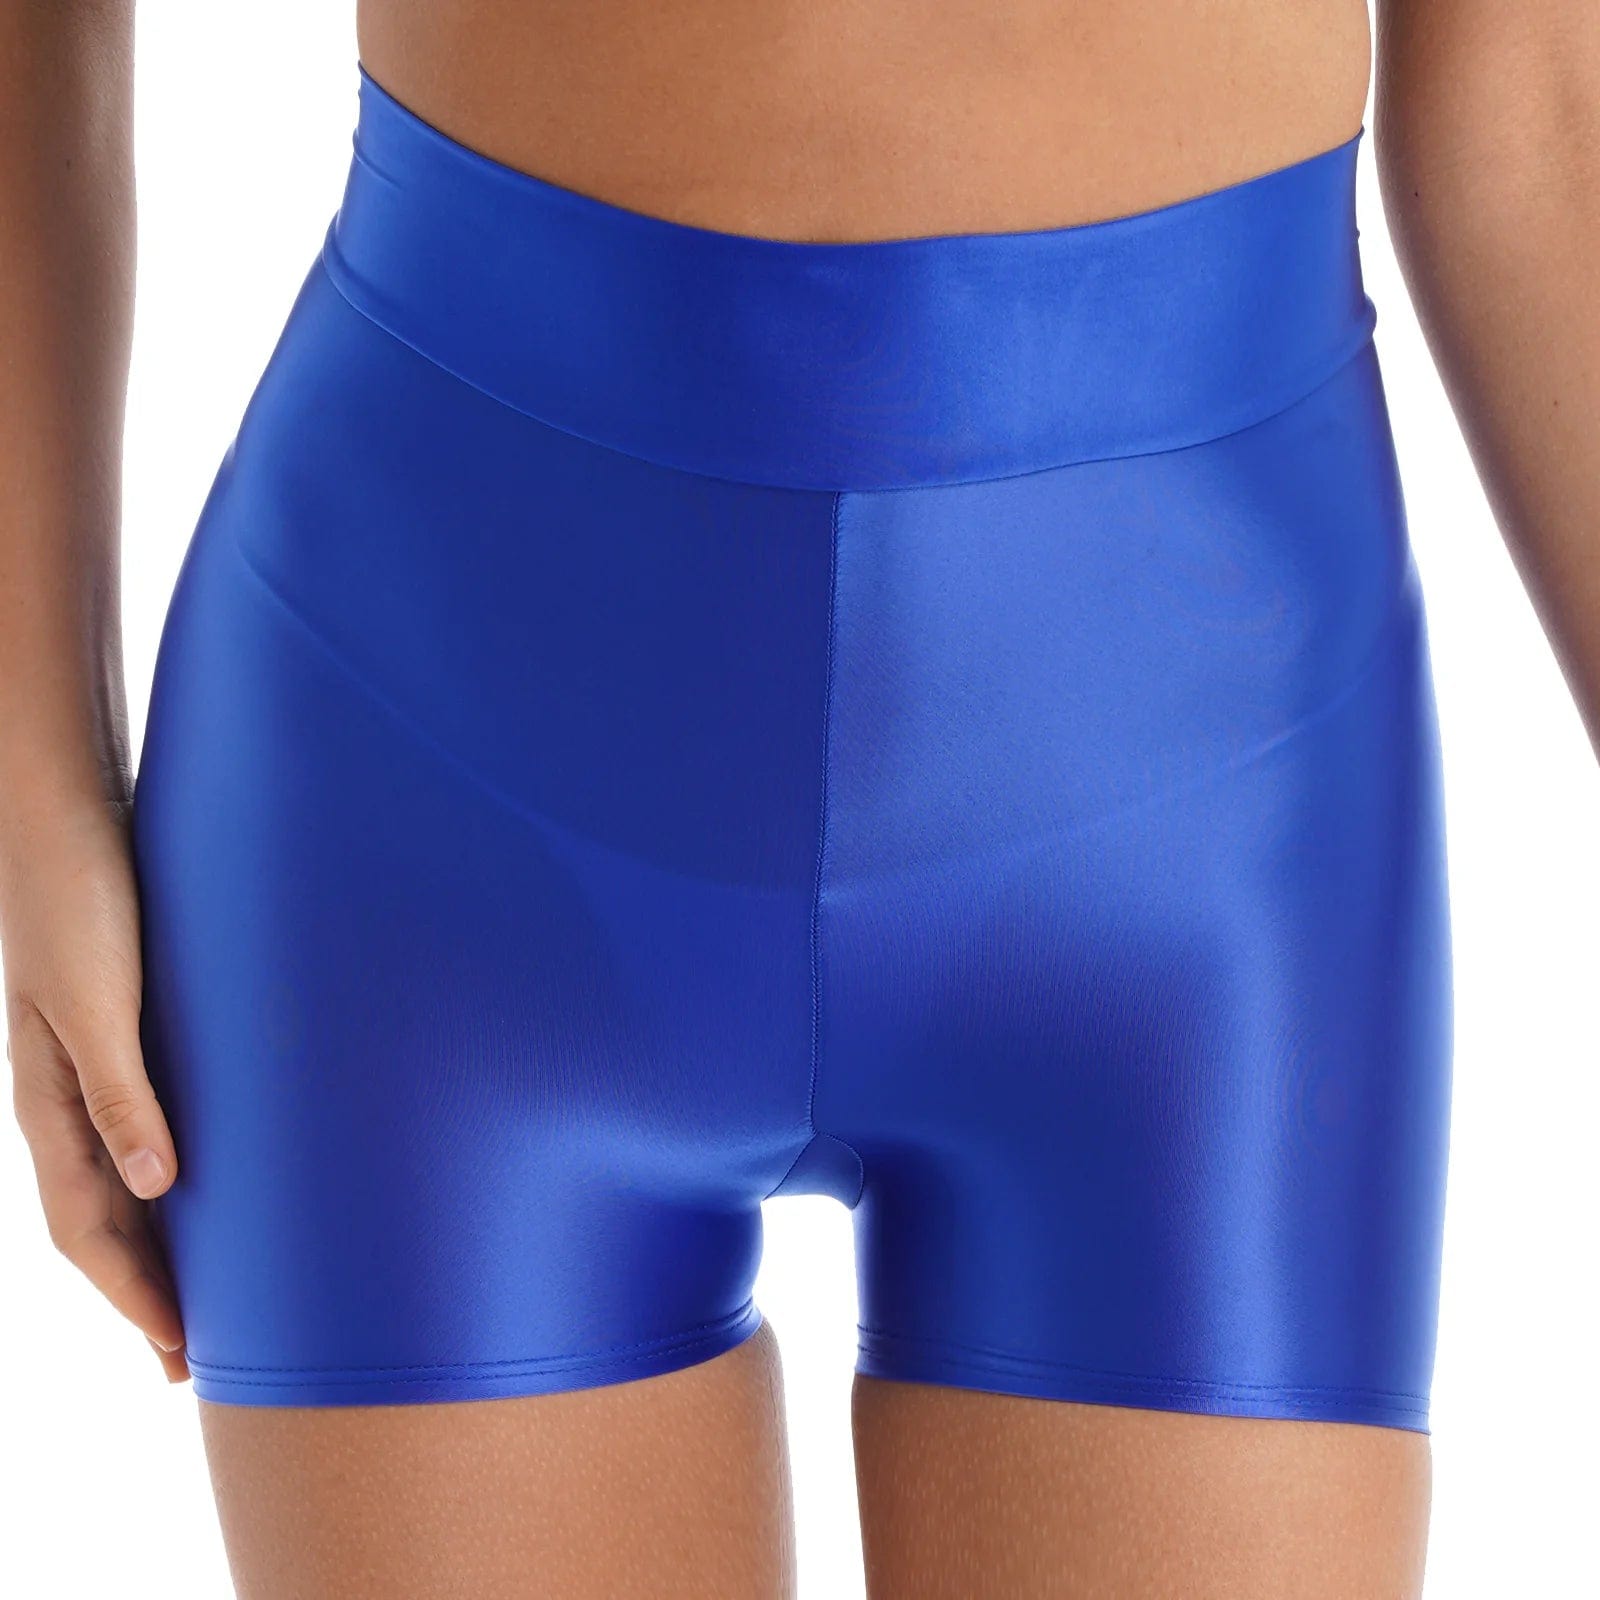 Kinky Cloth Blue A / M Smooth Glossy Elastic Shorts